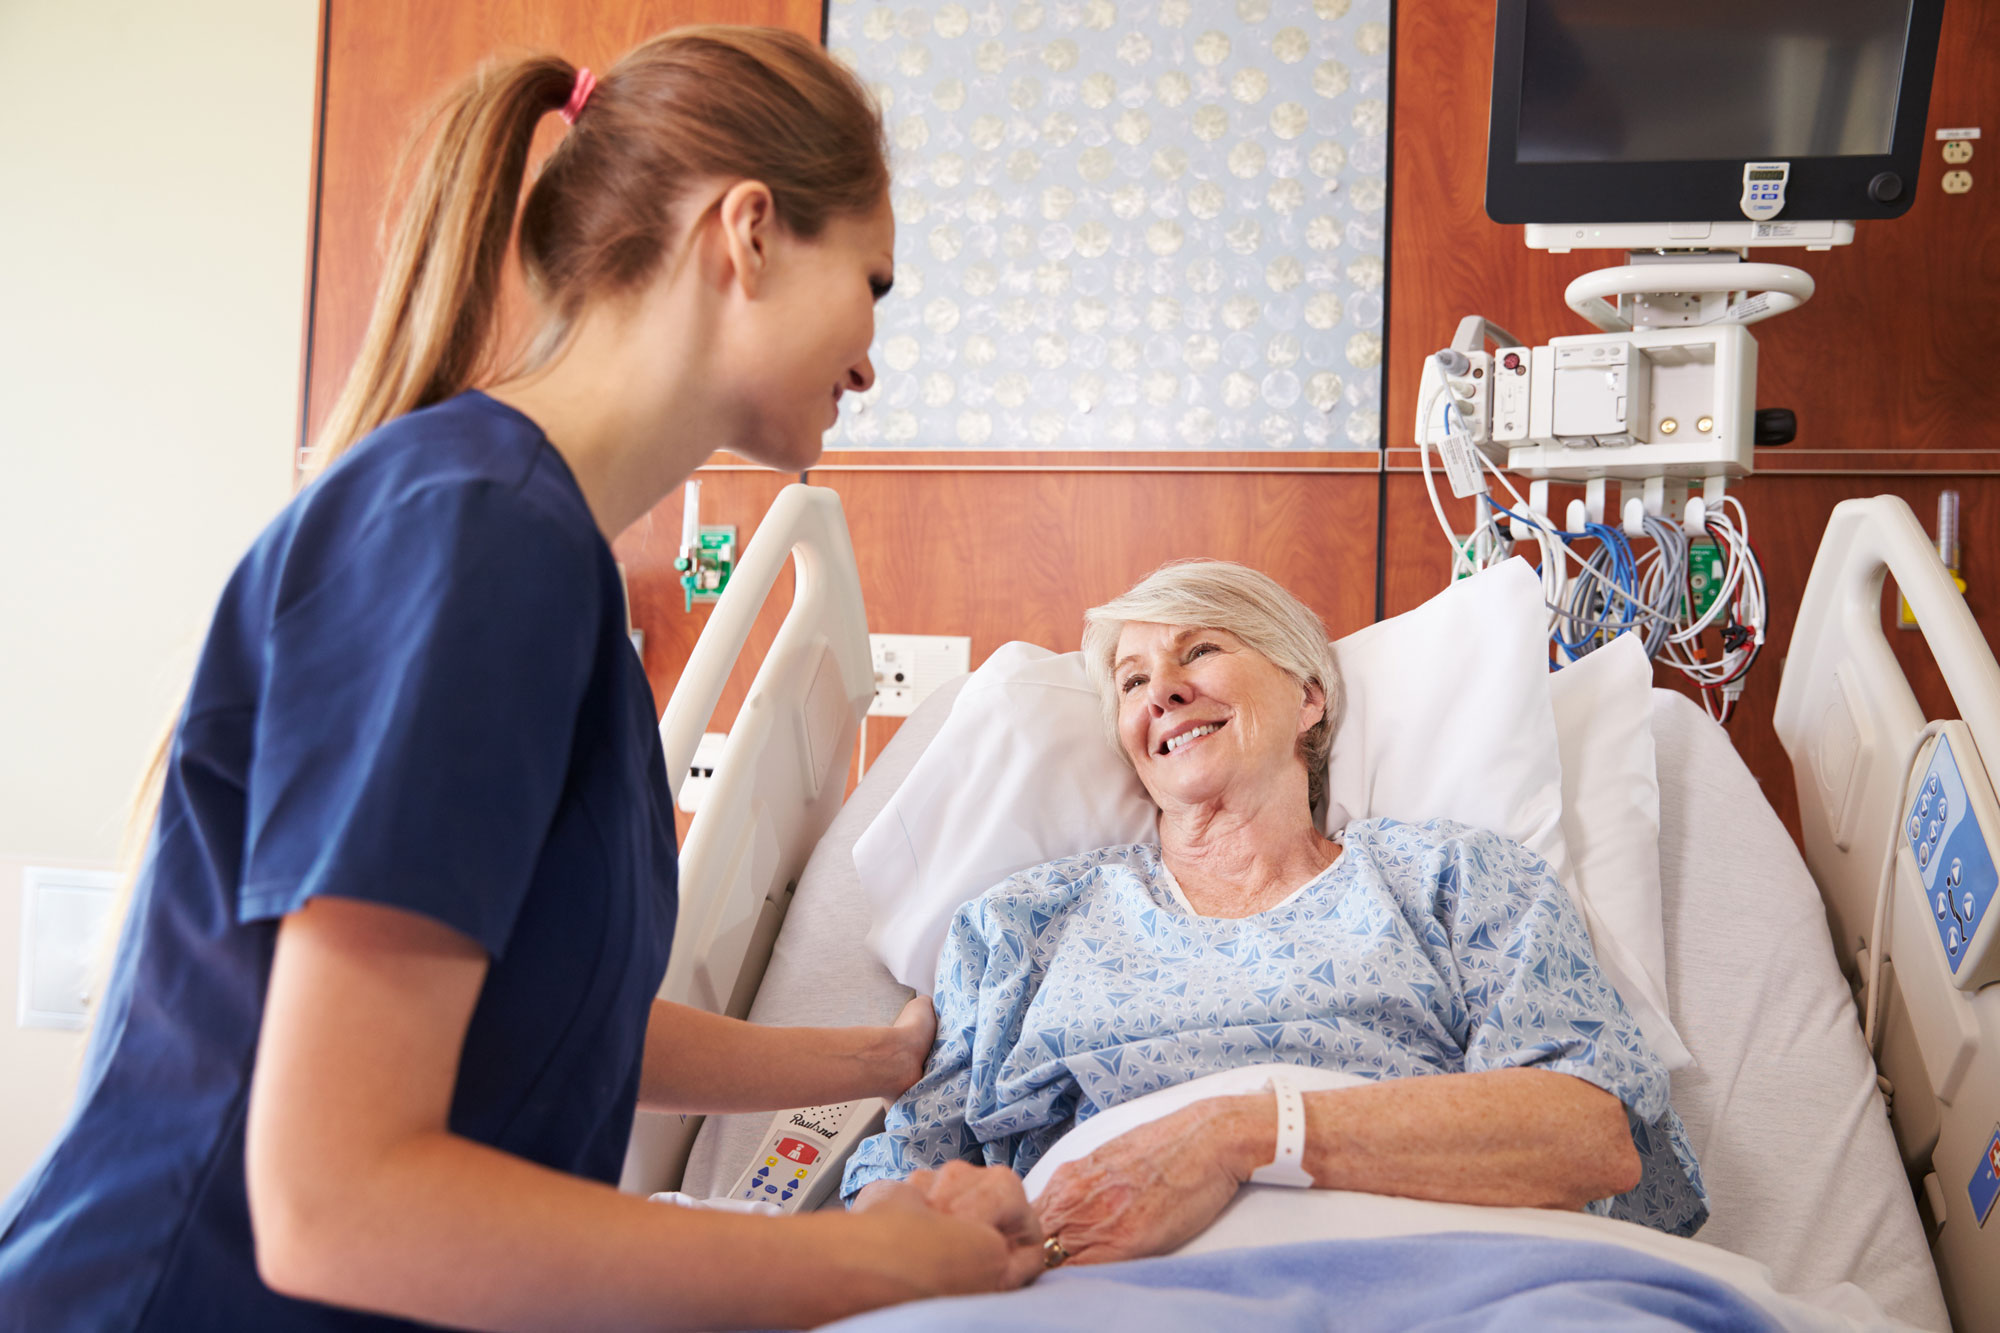 A female nurse is tending to an elderly patient